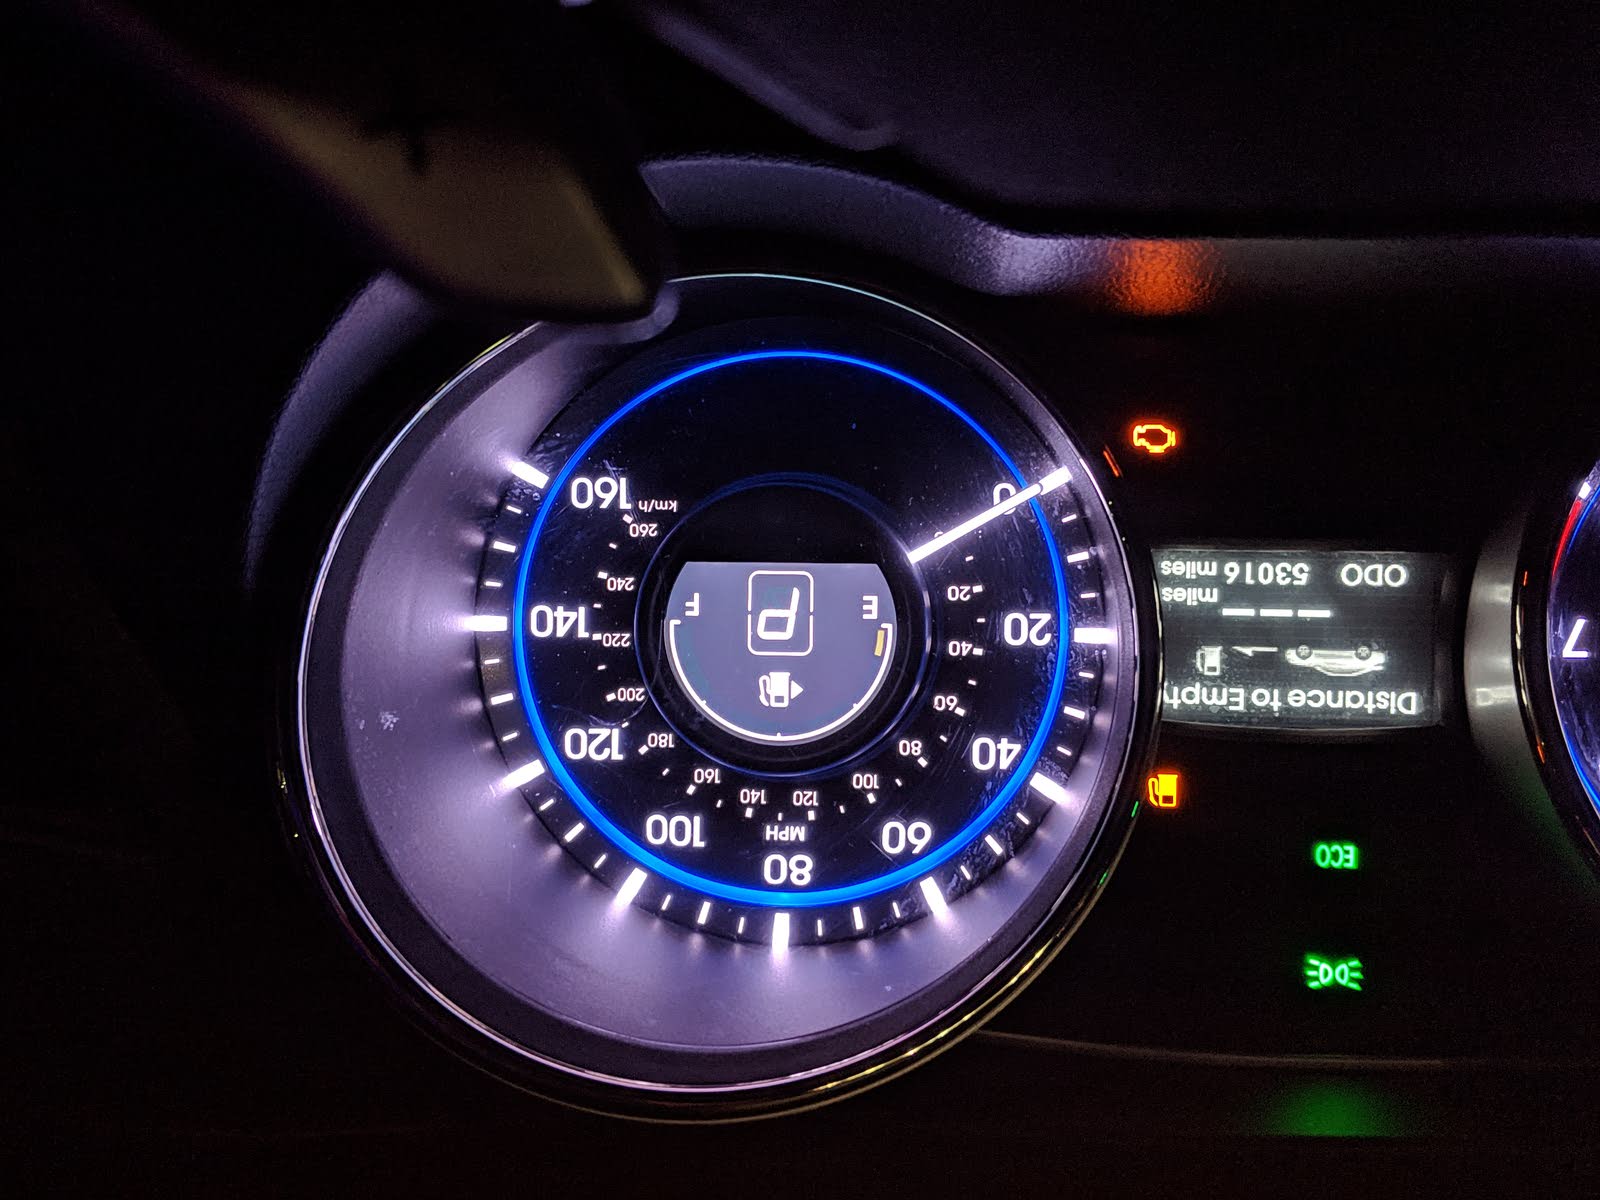 Hyundai Sonata - Gas gauge, low fuel light, and check engine light. - CarGurus